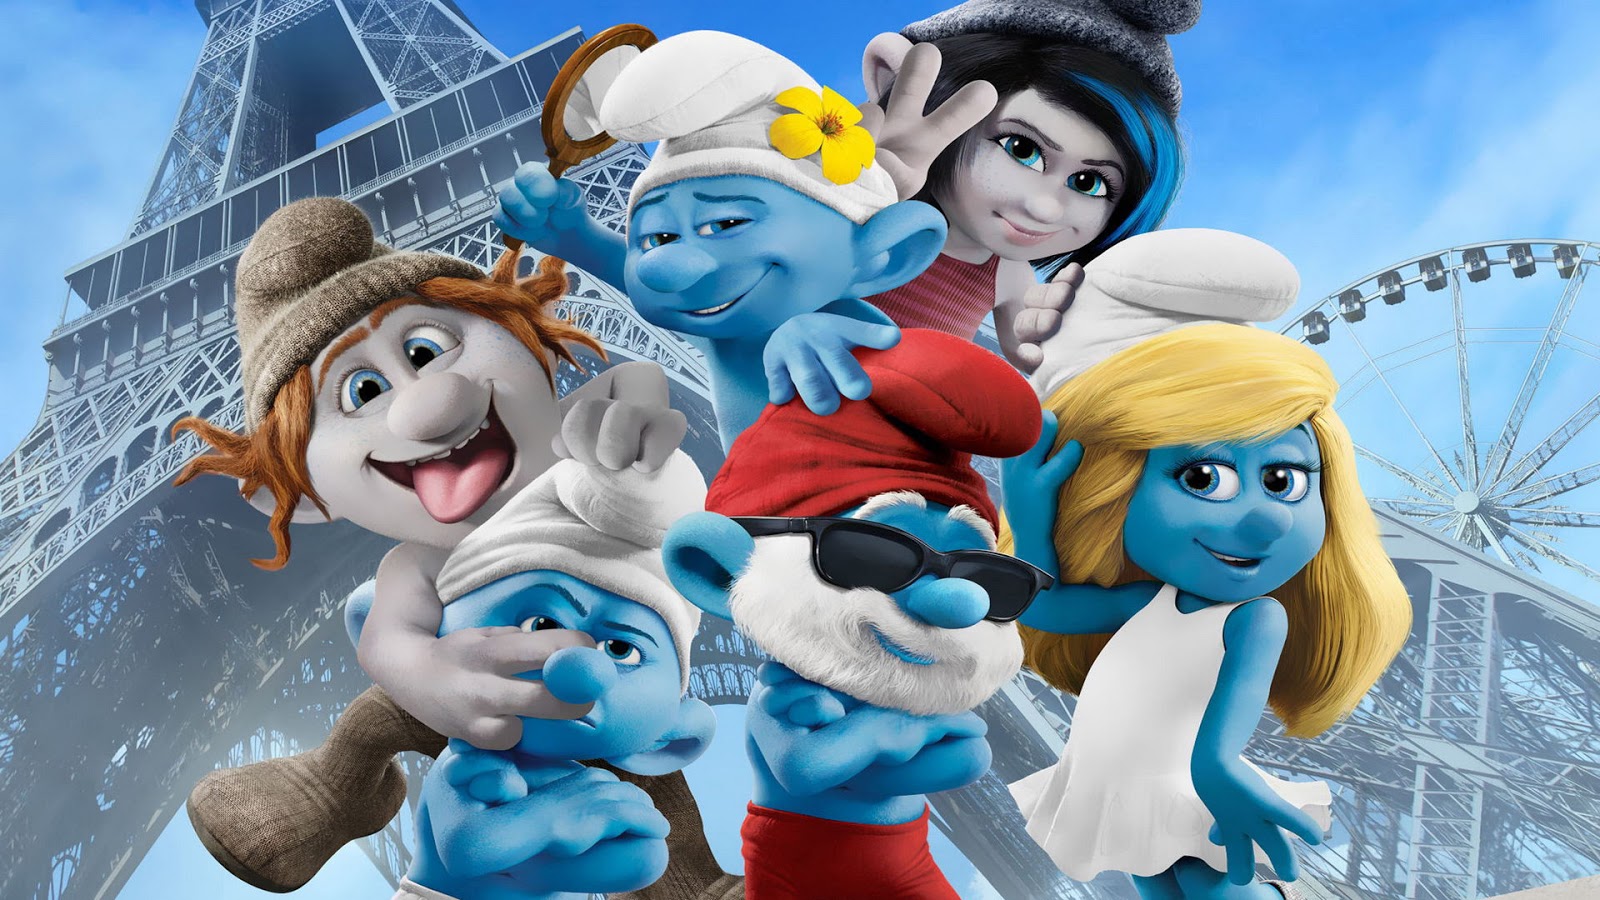 The Smurfs Movie Wallpaper For Desktop Apps Directories